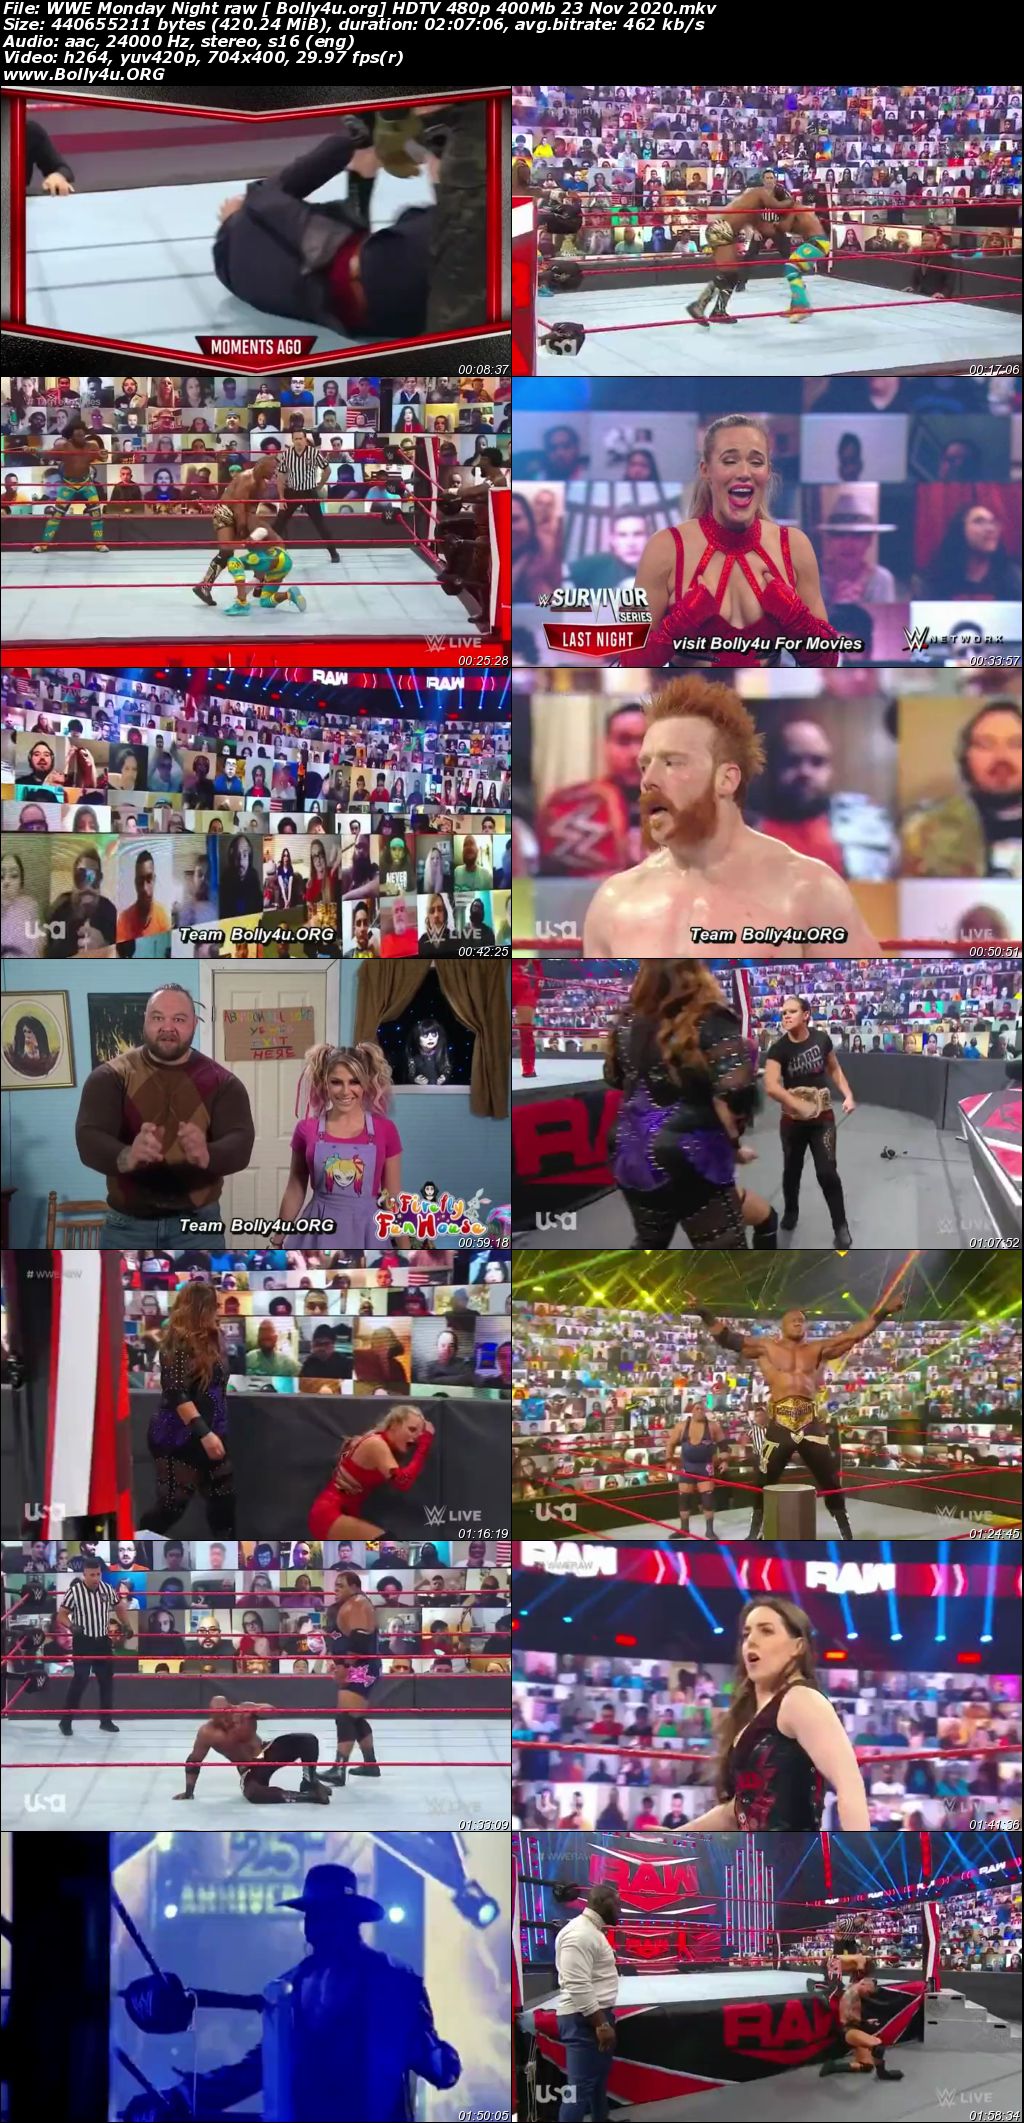 WWE Monday Night Raw HDTV 480p 400Mb 23 Nov 2020 Download